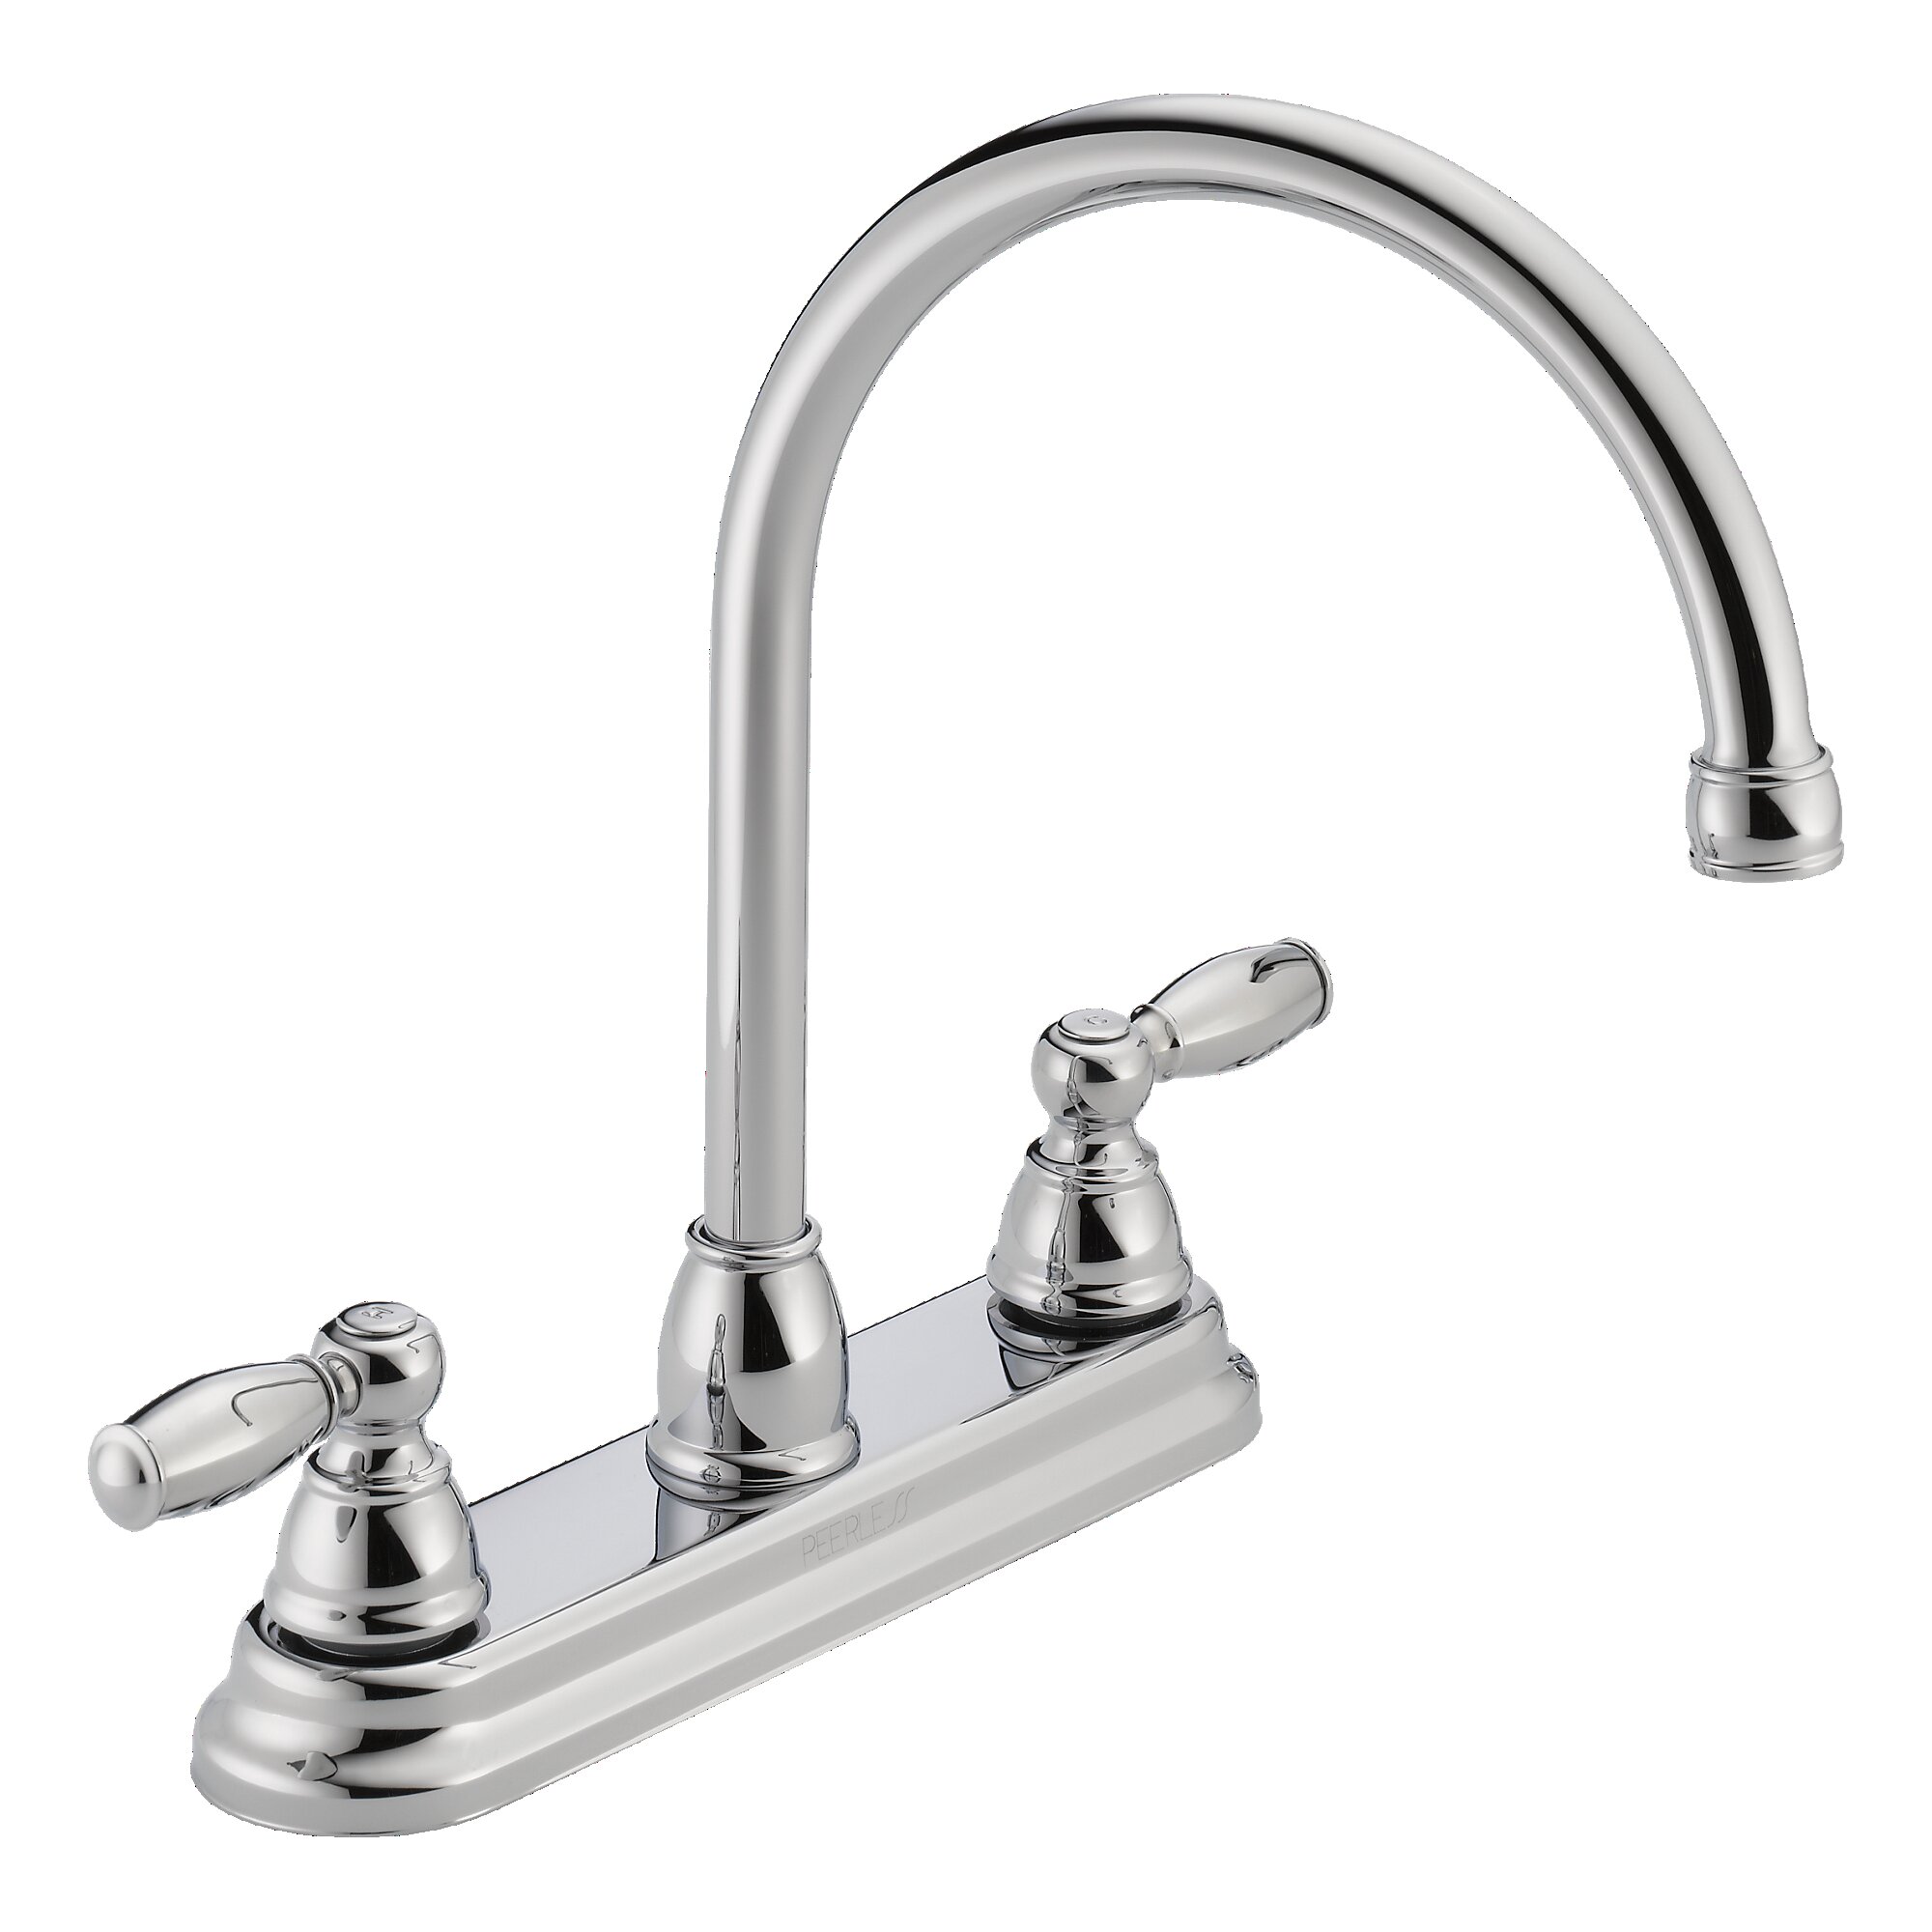 Peerless Faucets Apex Double Handle Kitchen Faucet | eBay